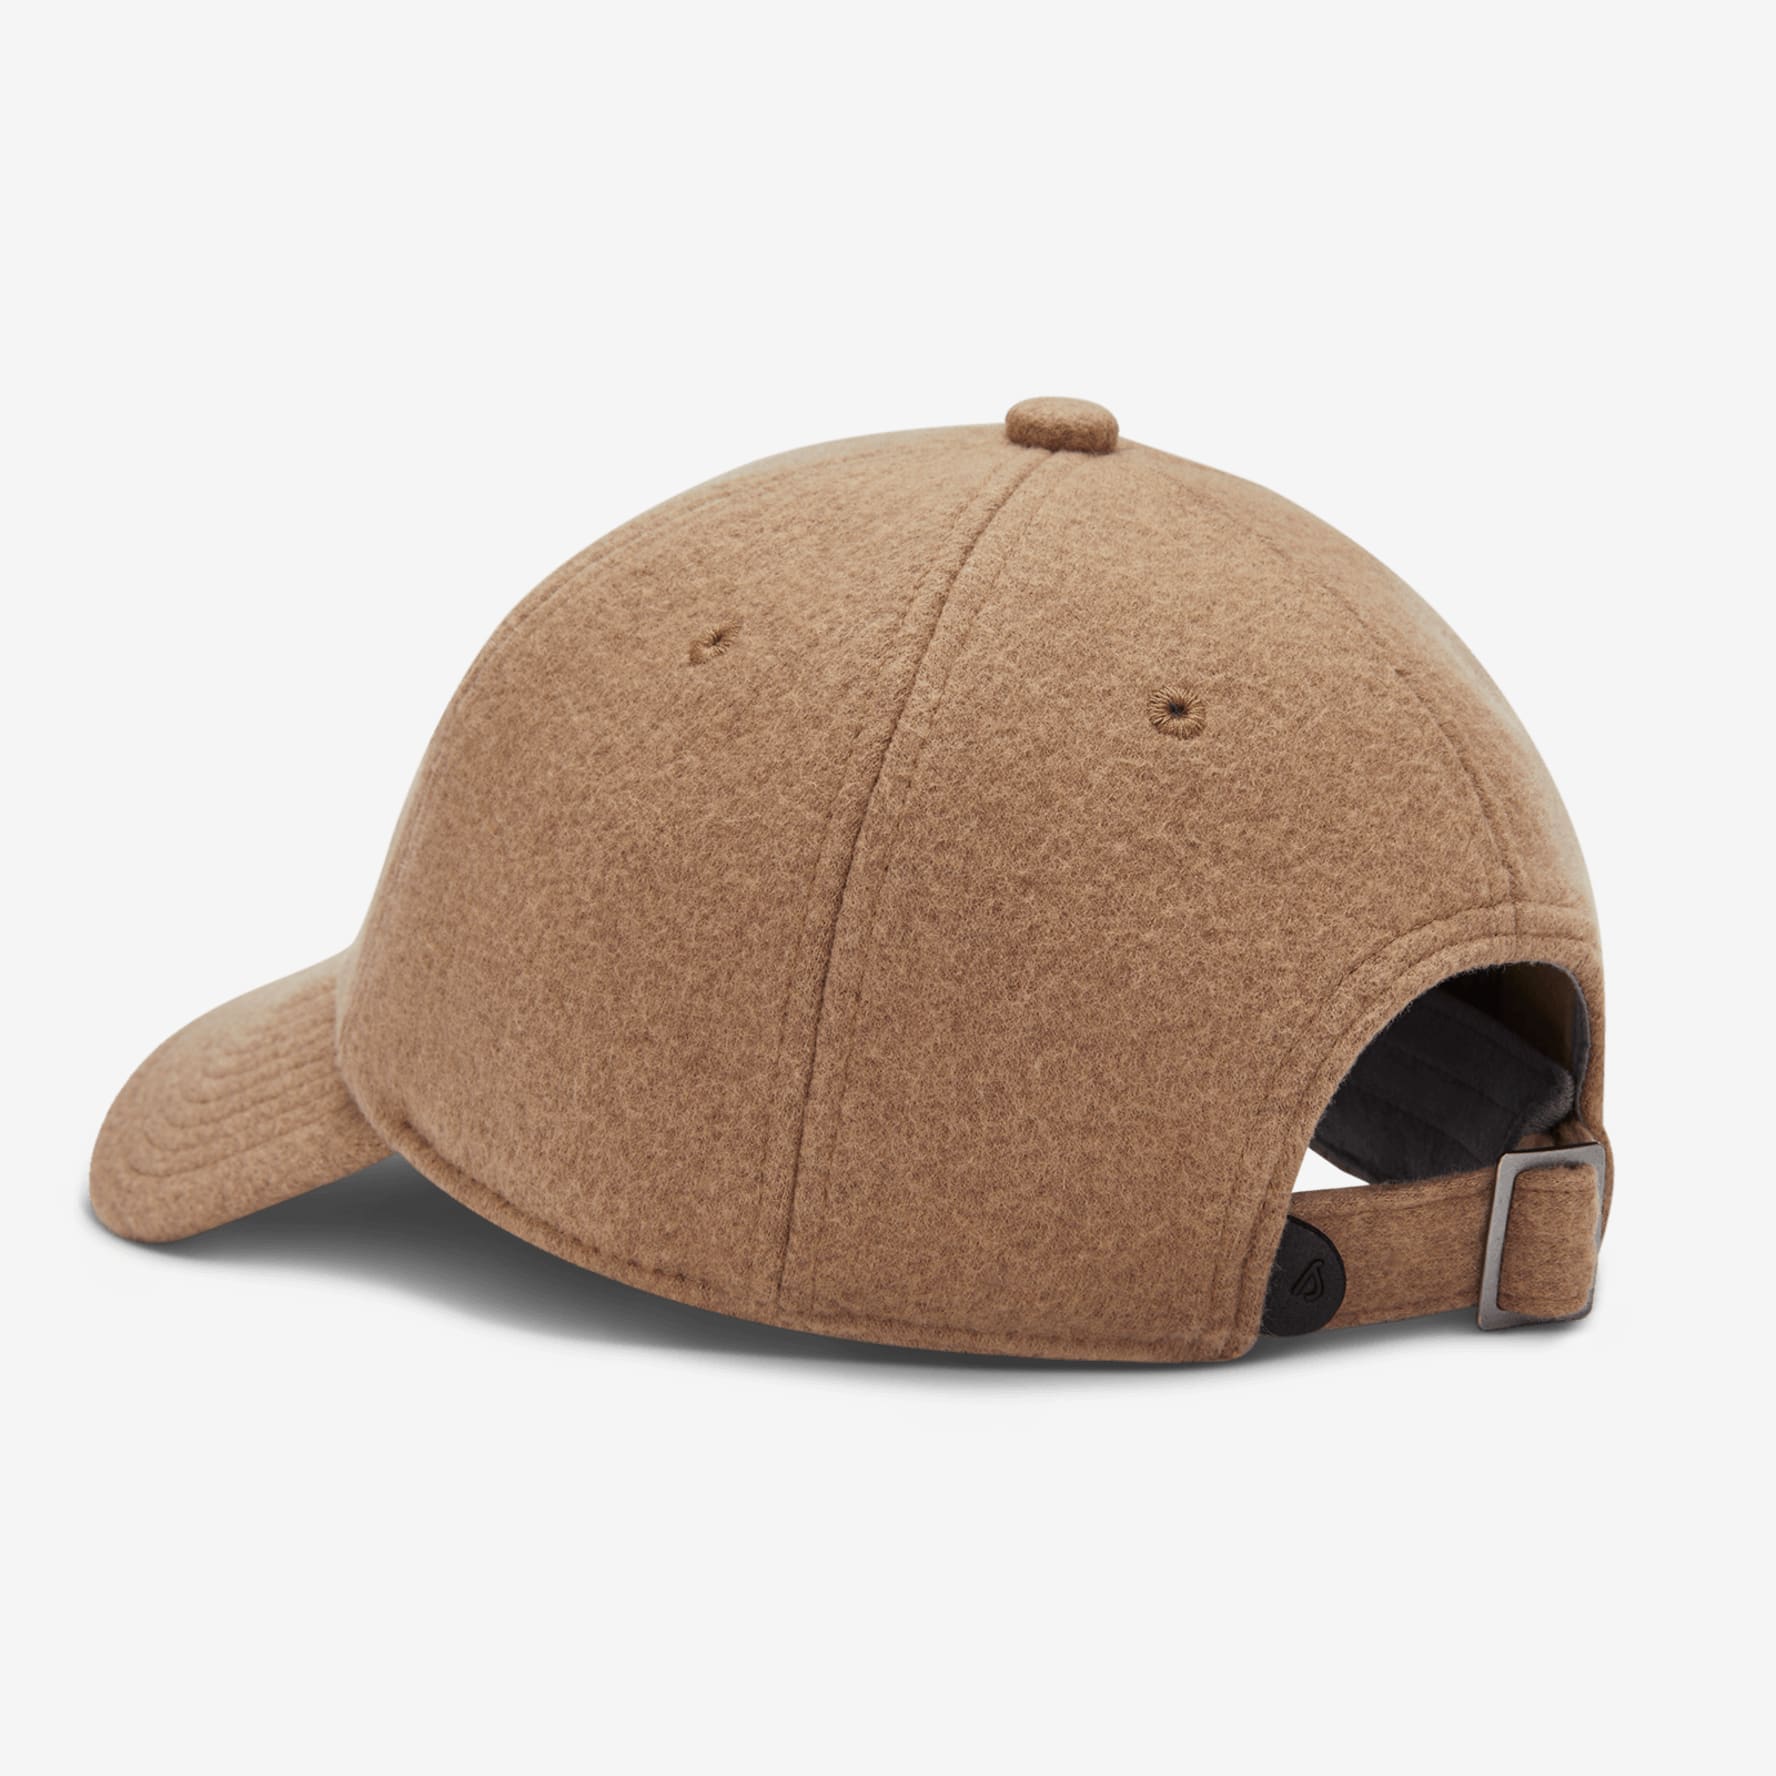 The Cap | Baseball Allbirds | Hat